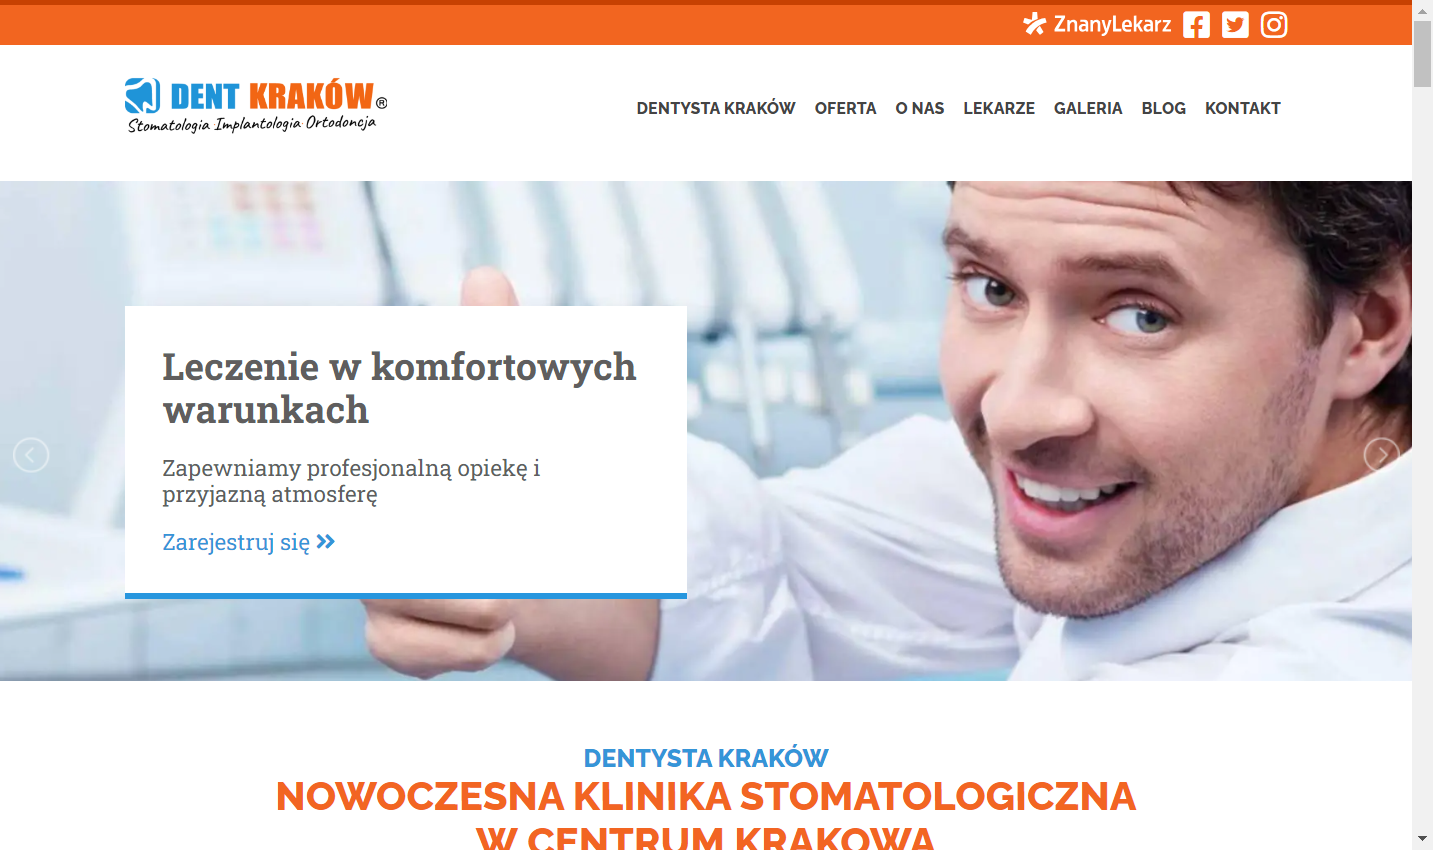 Dent Krakow - Dentistry, Implantology and Orthodontics